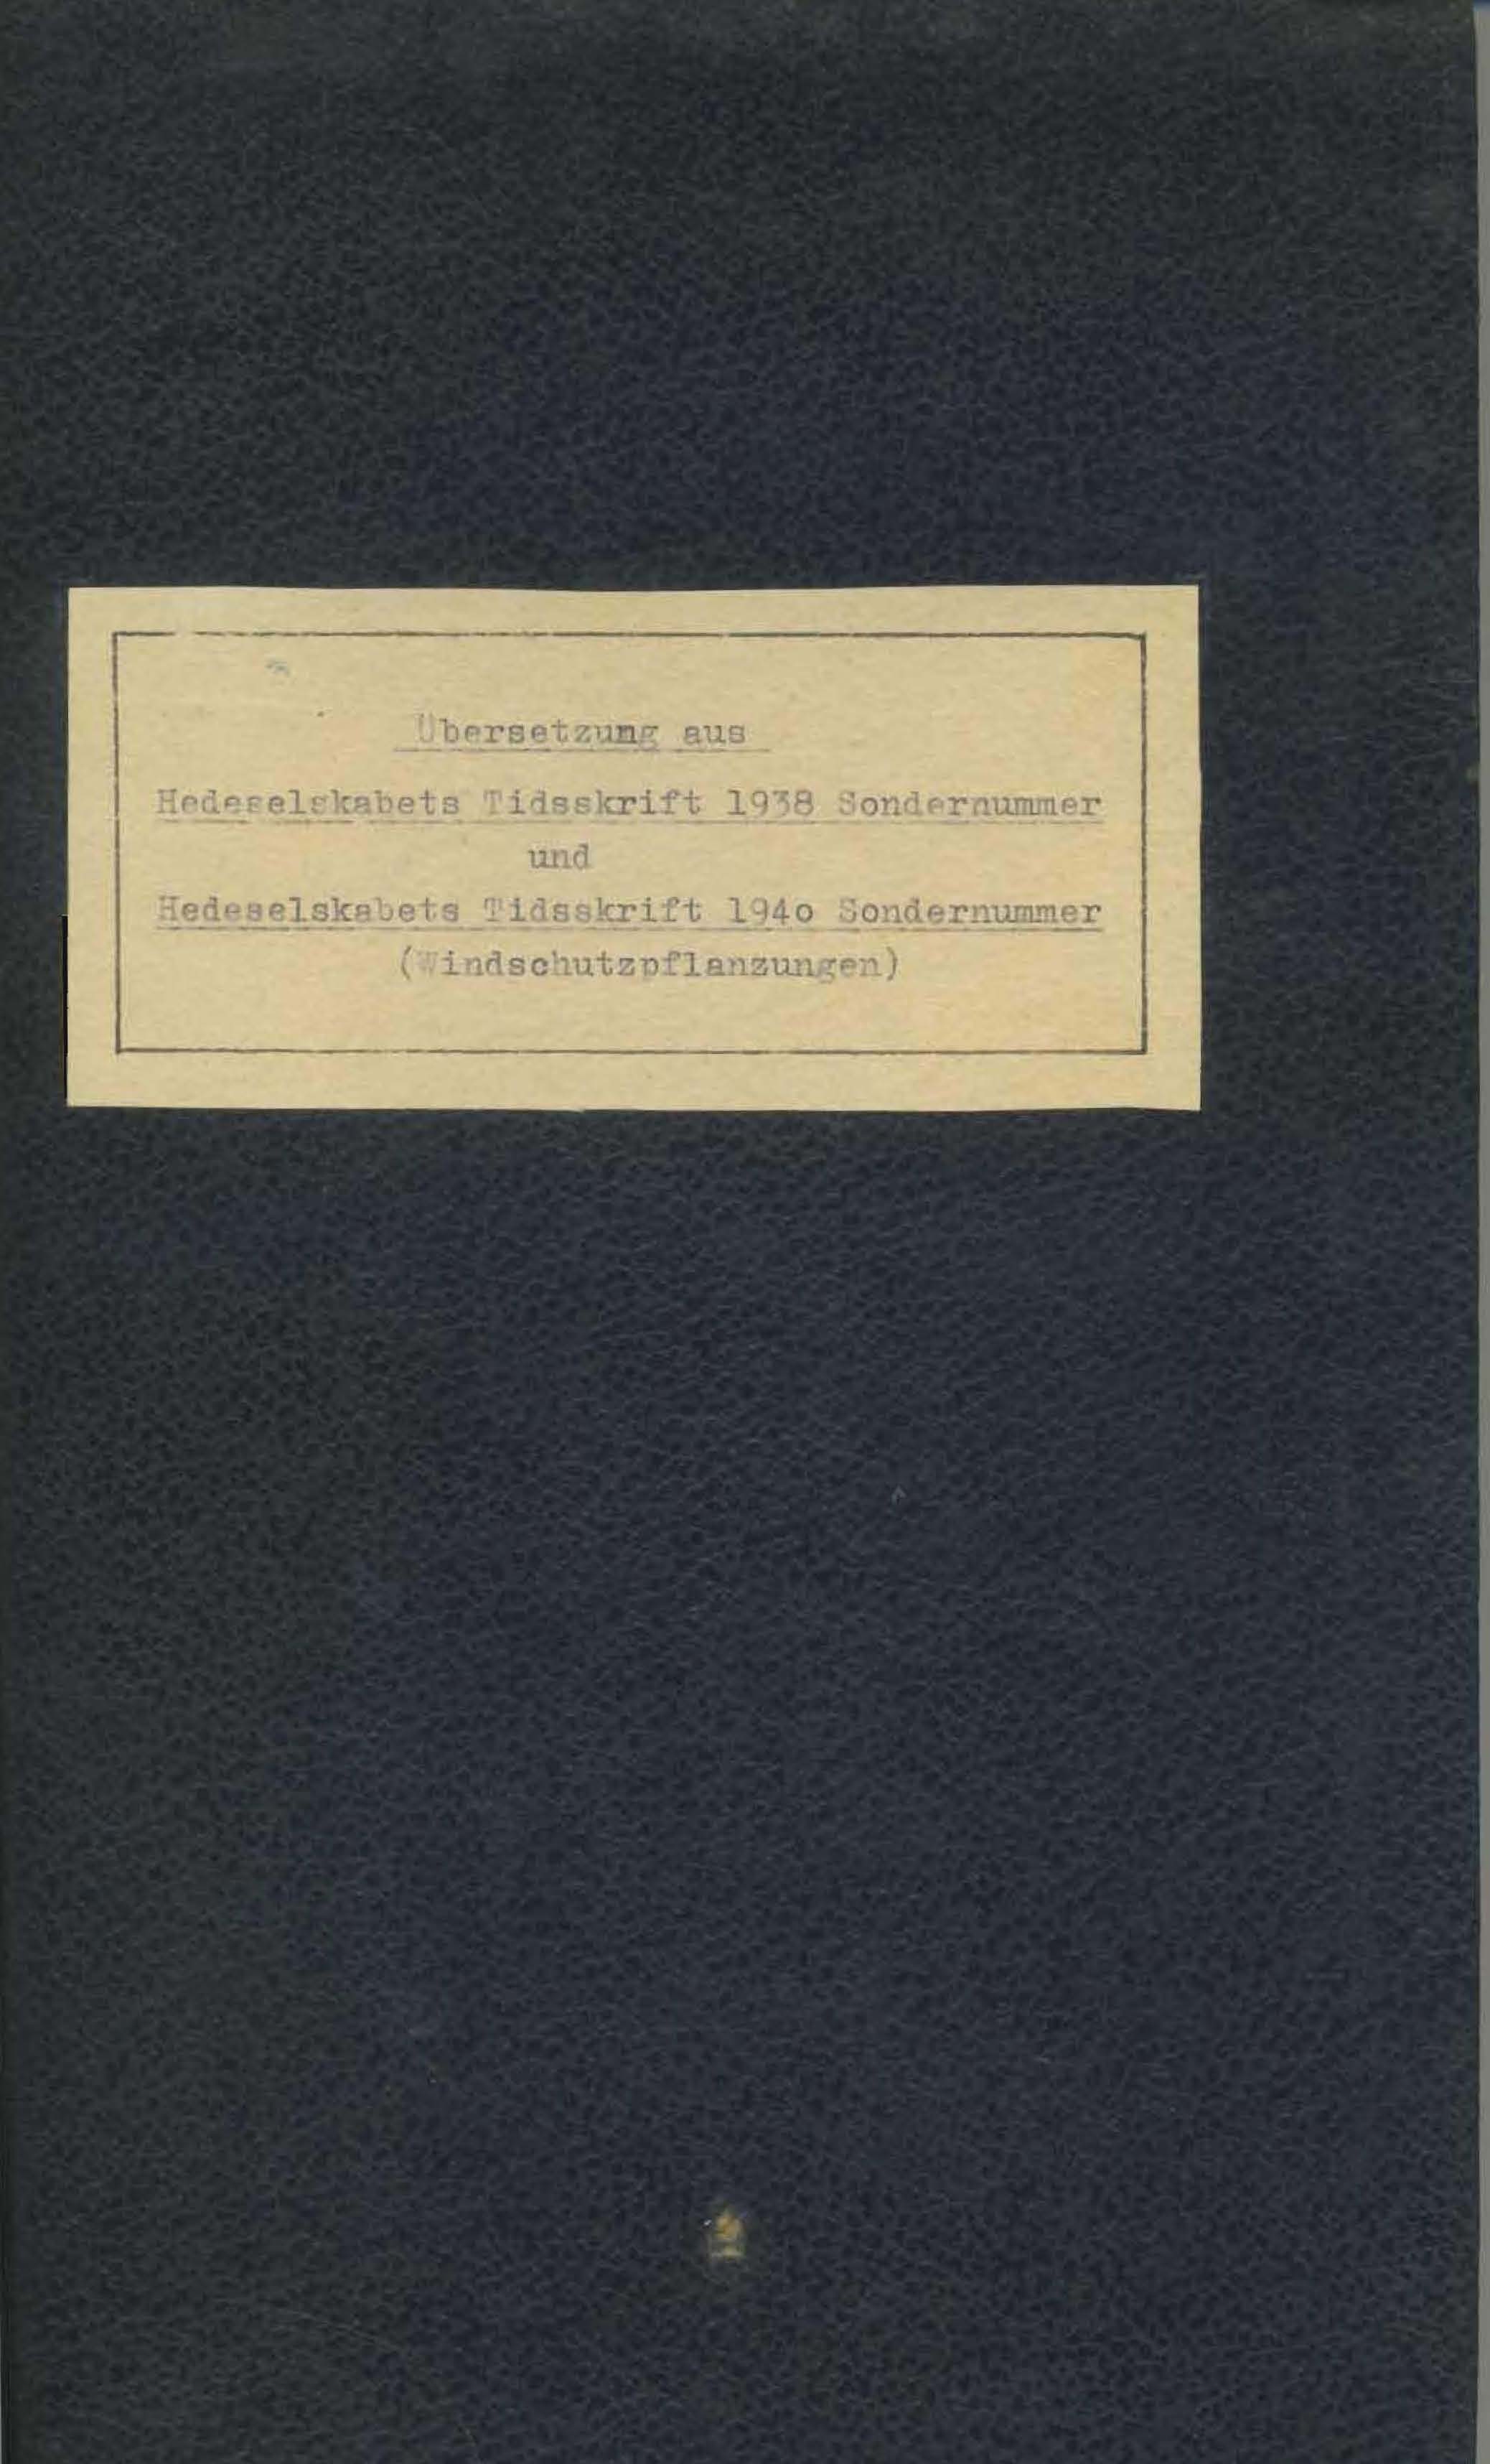 Übersetzung aus Hedeselskabets Tidsskrift 1938 Sondernummer und Hedeselskabets Tidsskrift 1940 Sondernummer